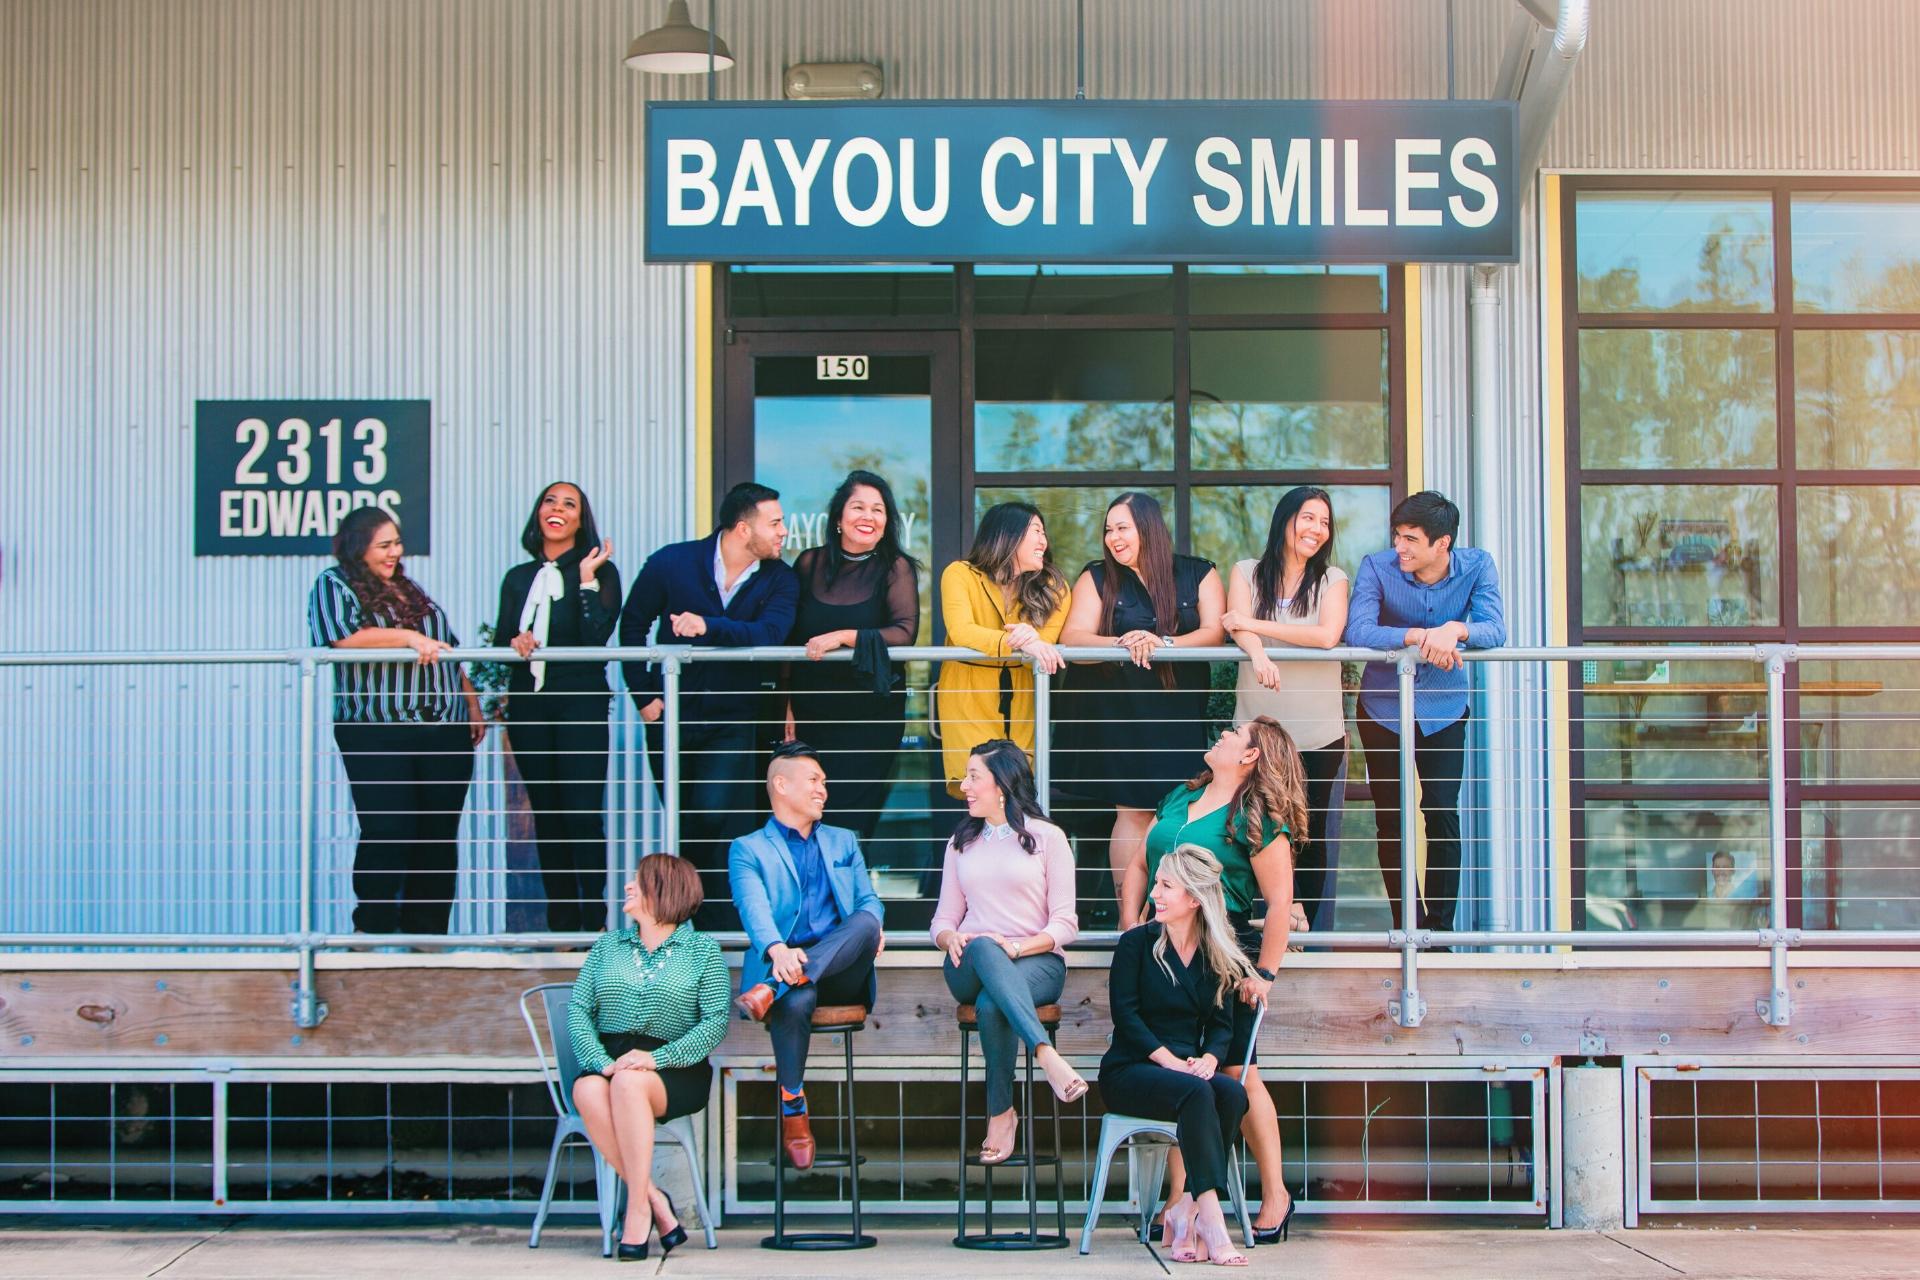 Bayou city smiles happy faces